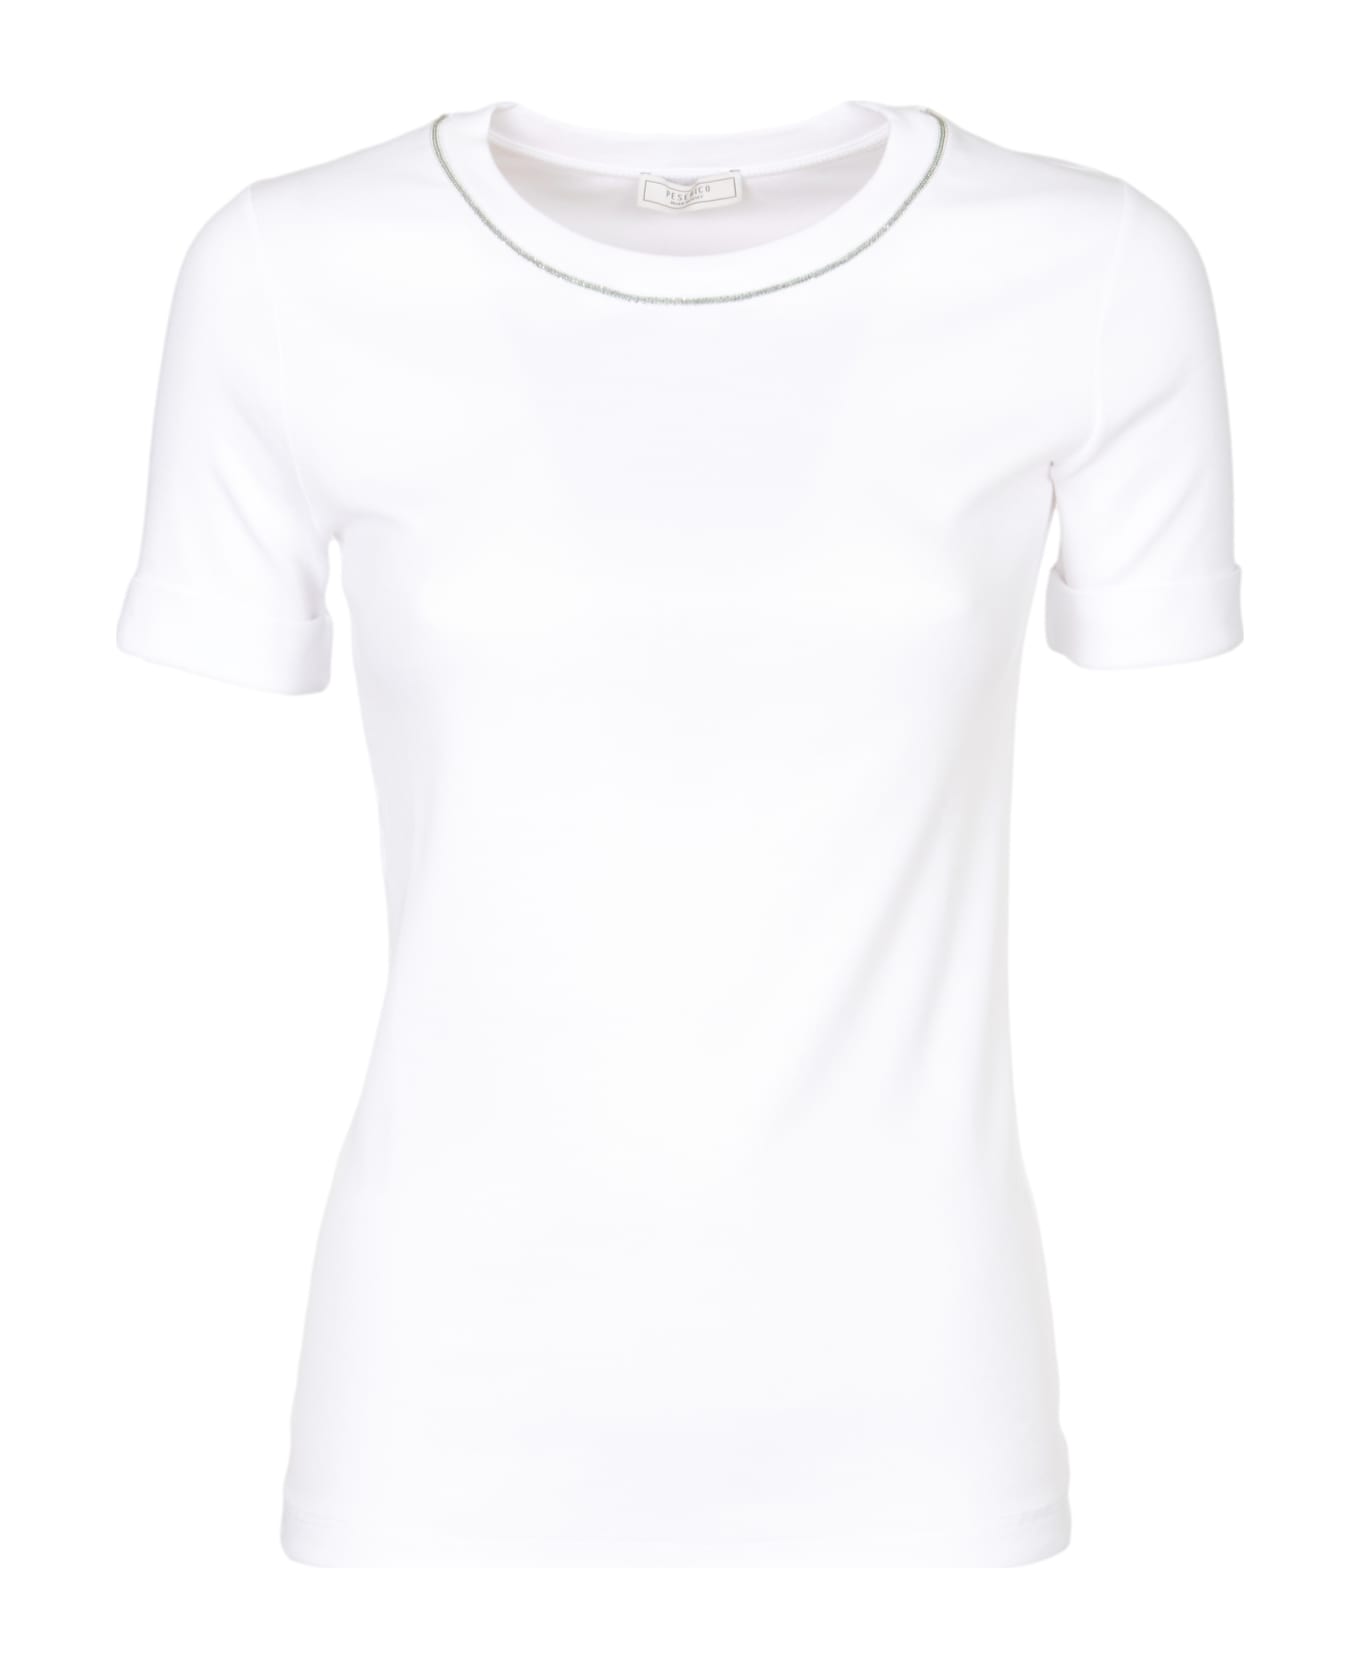 Peserico T-shirt - White Tシャツ